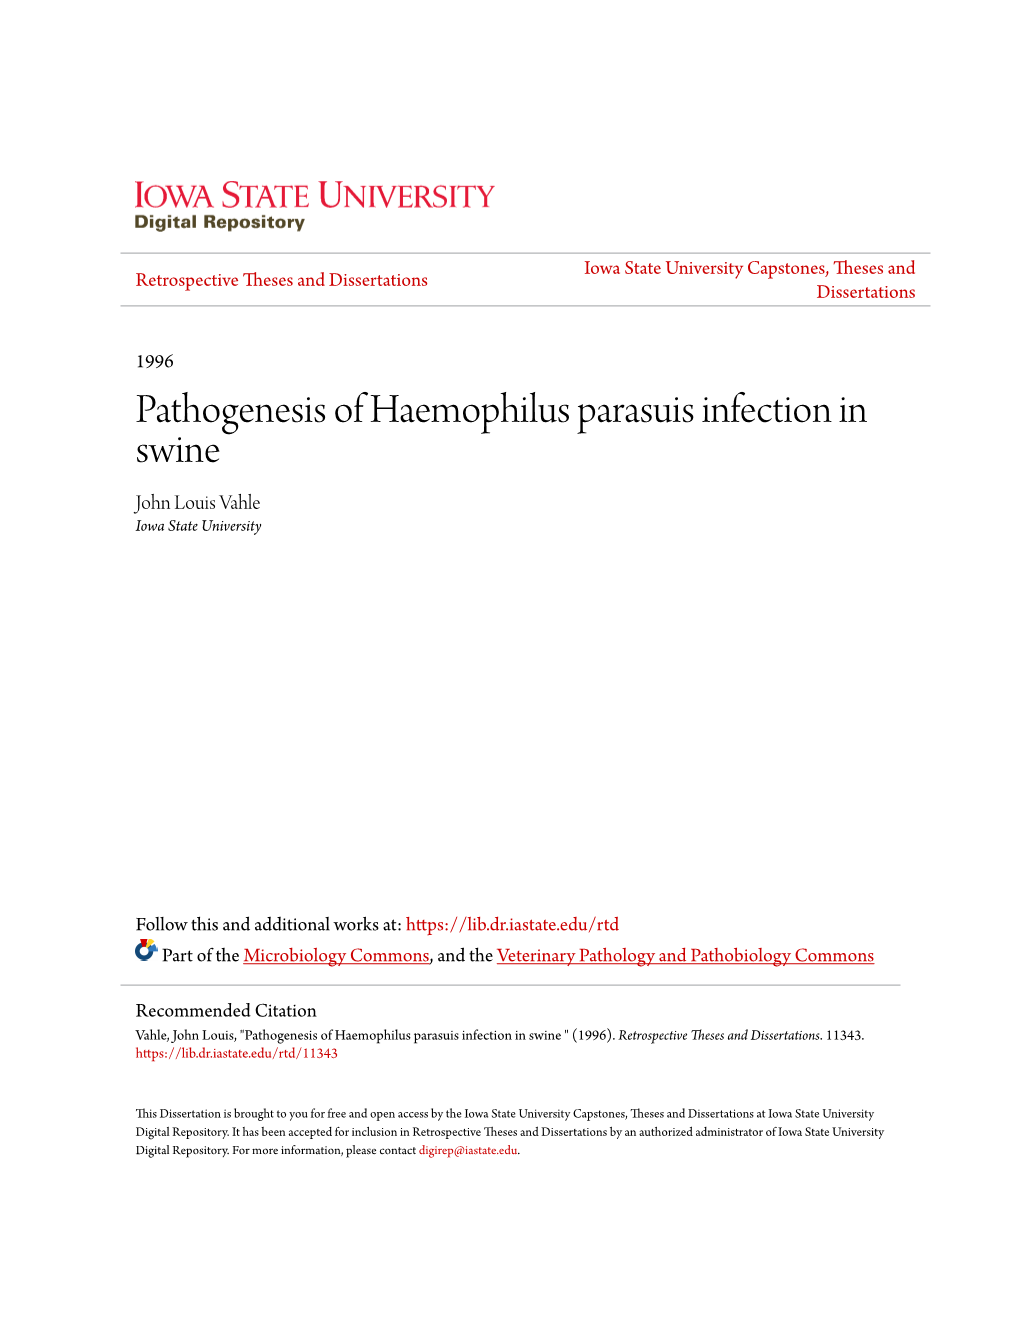 Pathogenesis of Haemophilus Parasuis Infection in Swine John Louis Vahle Iowa State University